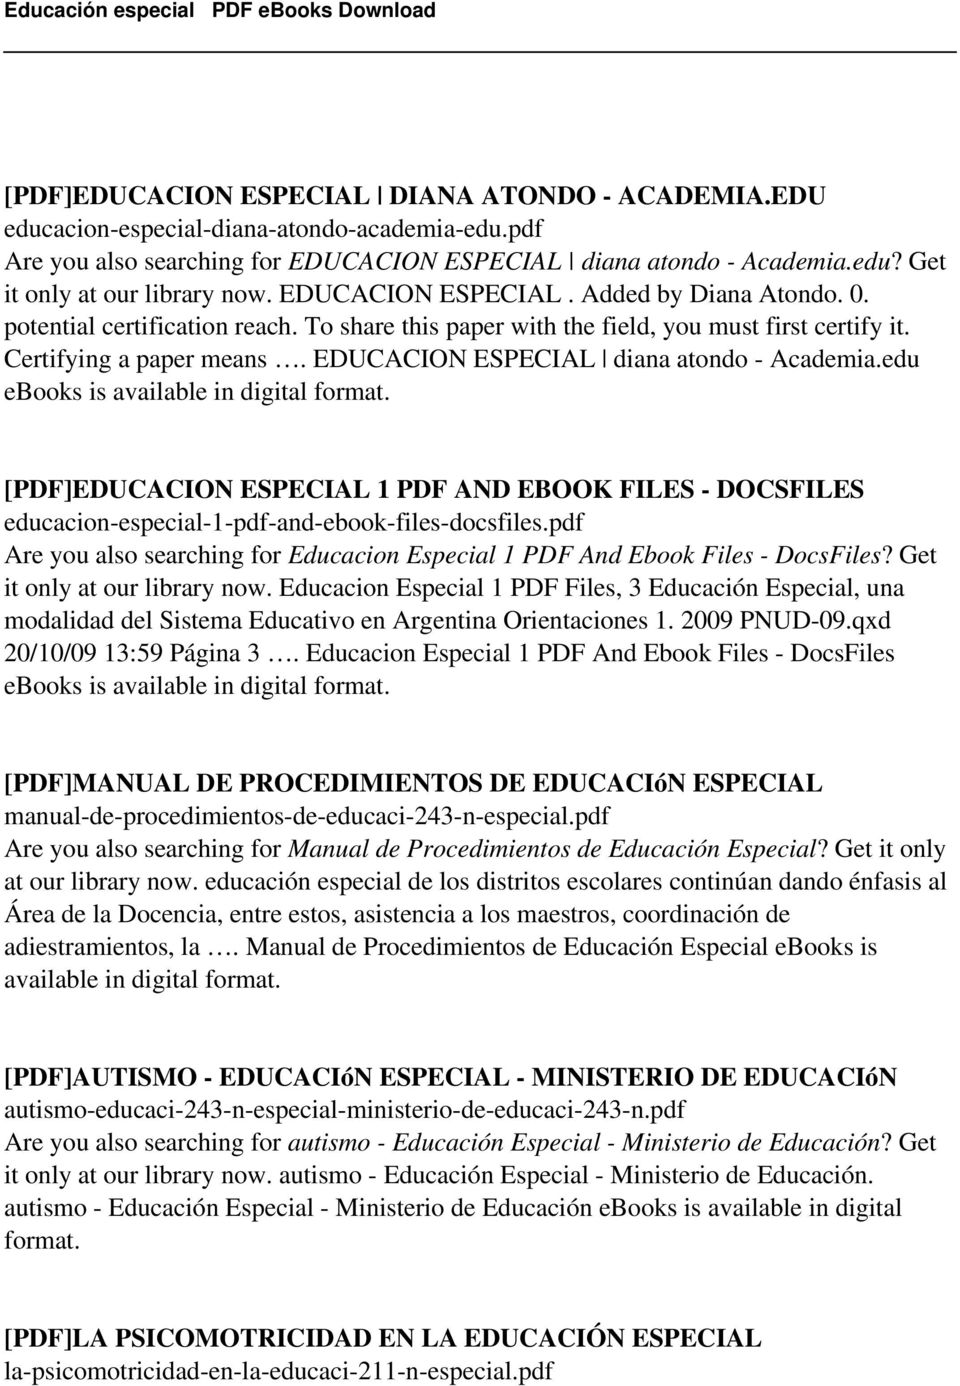 EDUCACION ESPECIAL diana atondo - Academia.edu ebooks is [PDF]EDUCACION ESPECIAL 1 PDF AND EBOOK FILES - DOCSFILES educacion-especial-1-pdf-and-ebook-files-docsfiles.